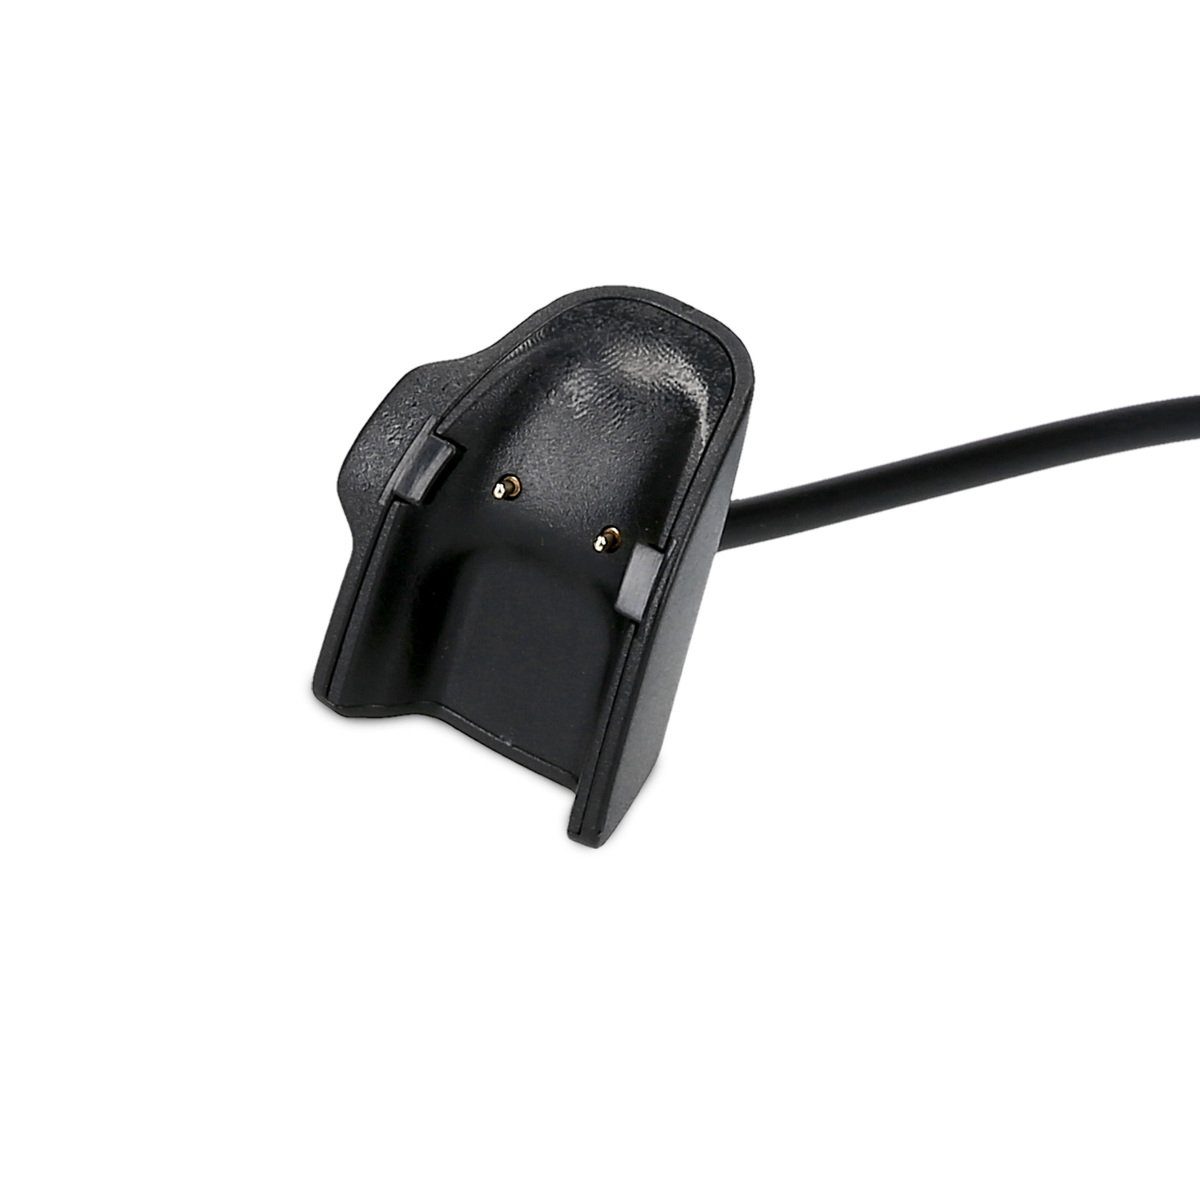 Fitnesstracker Kabel Smart Aufladekabel Galaxy kwmobile USB - e Elektro-Kabel, Fit Watch Ersatzkabel - für Charger Samsung Ladekabel